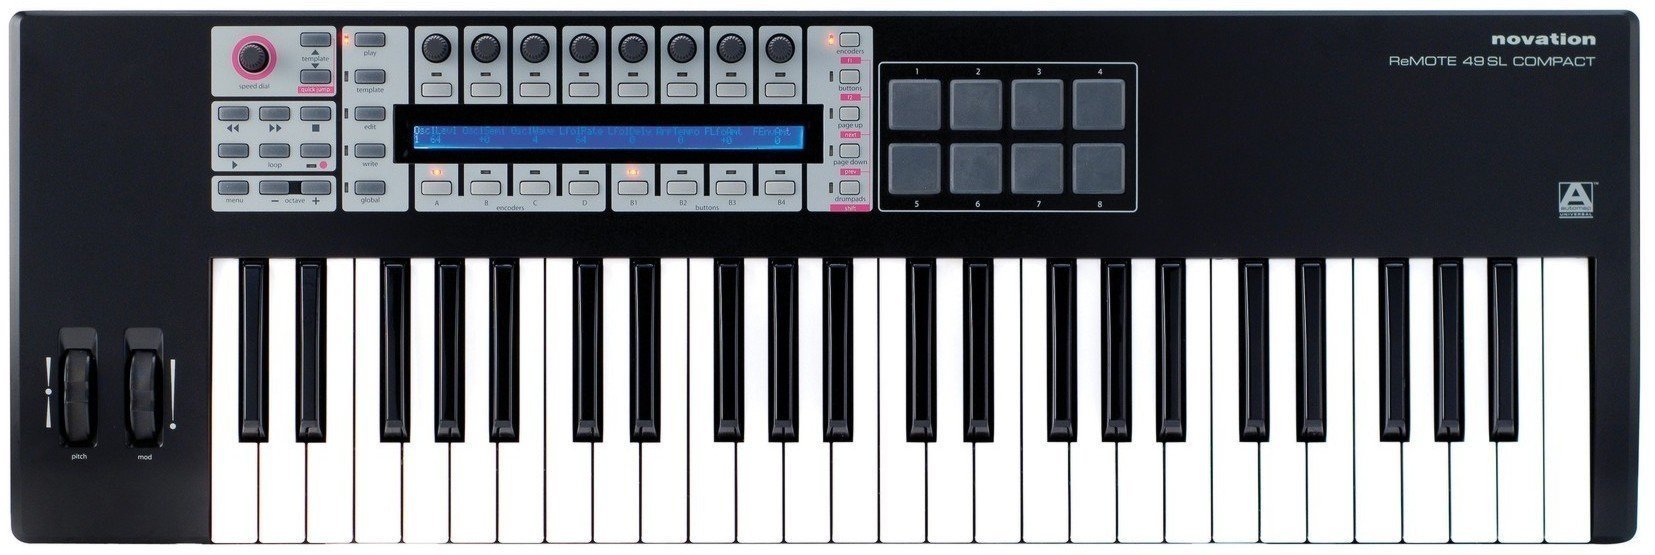 MIDI keyboard Novation Remote 49 SL COMPACT